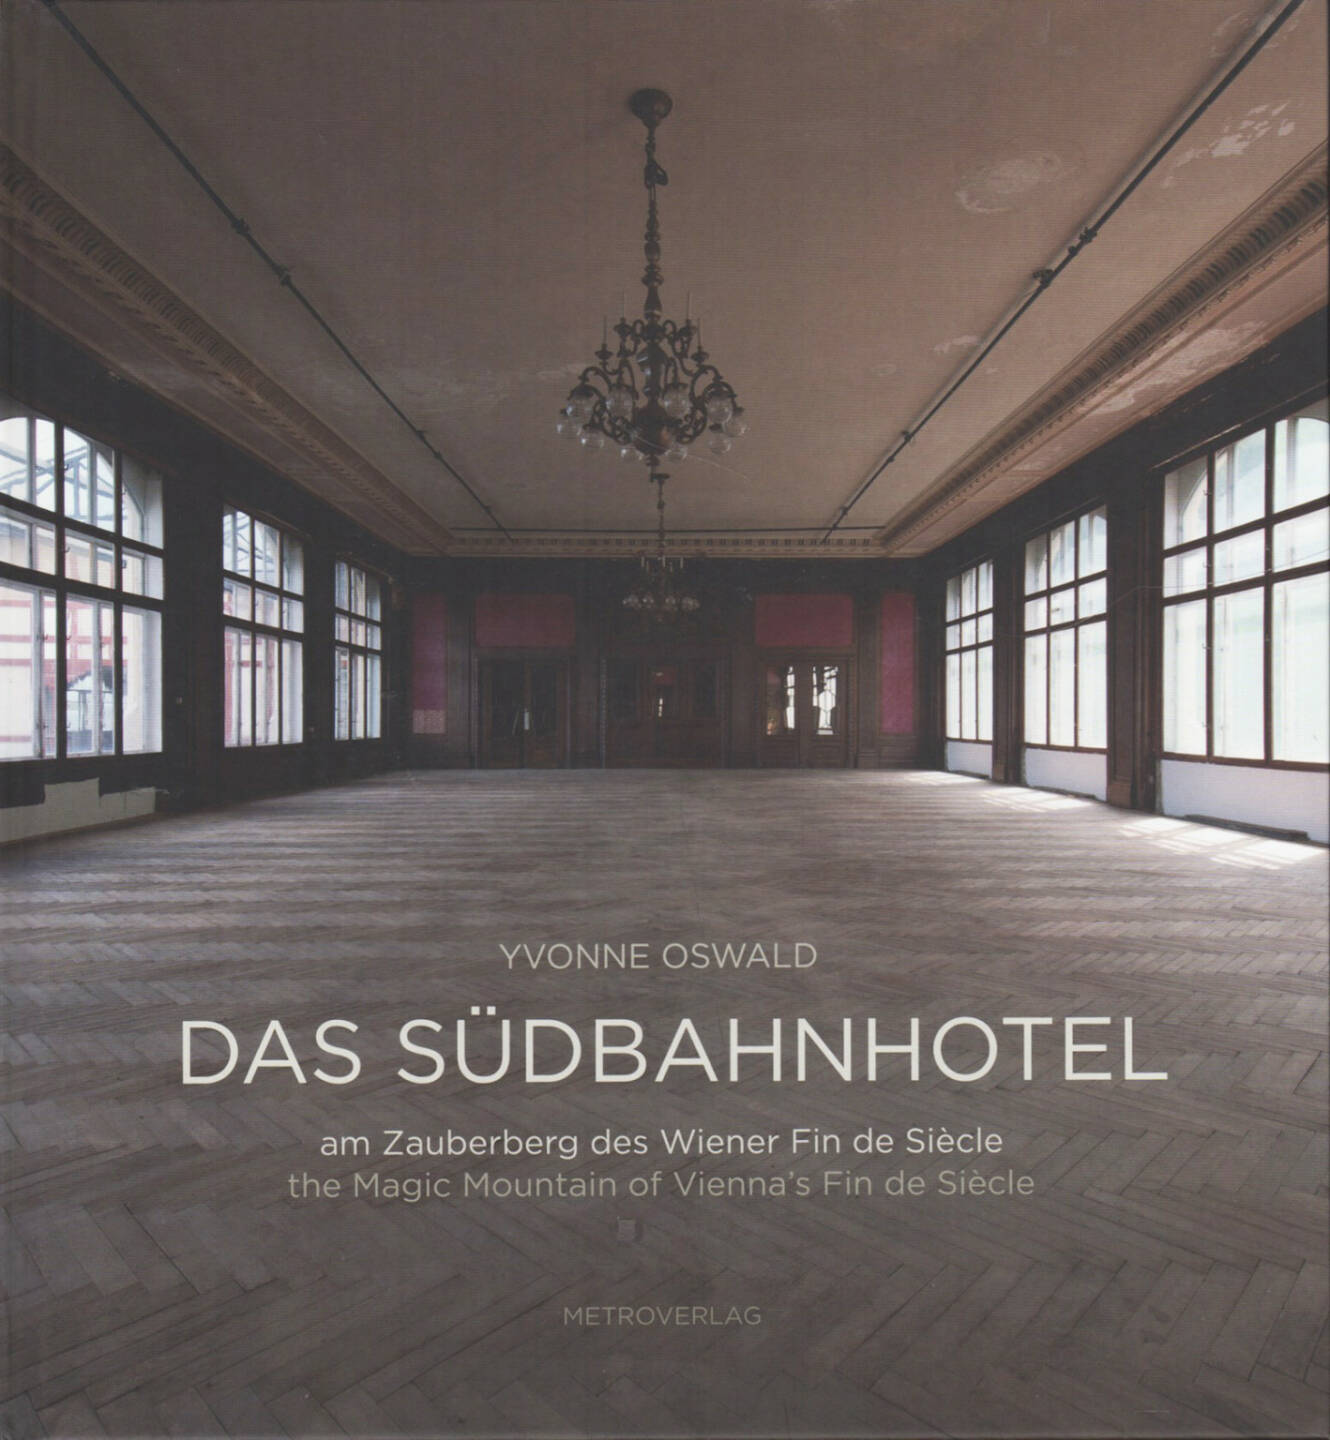 Yvonne Oswald - Das Südbahnhotel, Metroverlag 2014, Cover - http://josefchladek.com/book/yvonne_oswald_-_das_sudbahnhotel_-_am_zauberberg_des_wiener_fin_de_sieclethe_magic_mountain_of_viennas_fin_de_siecle